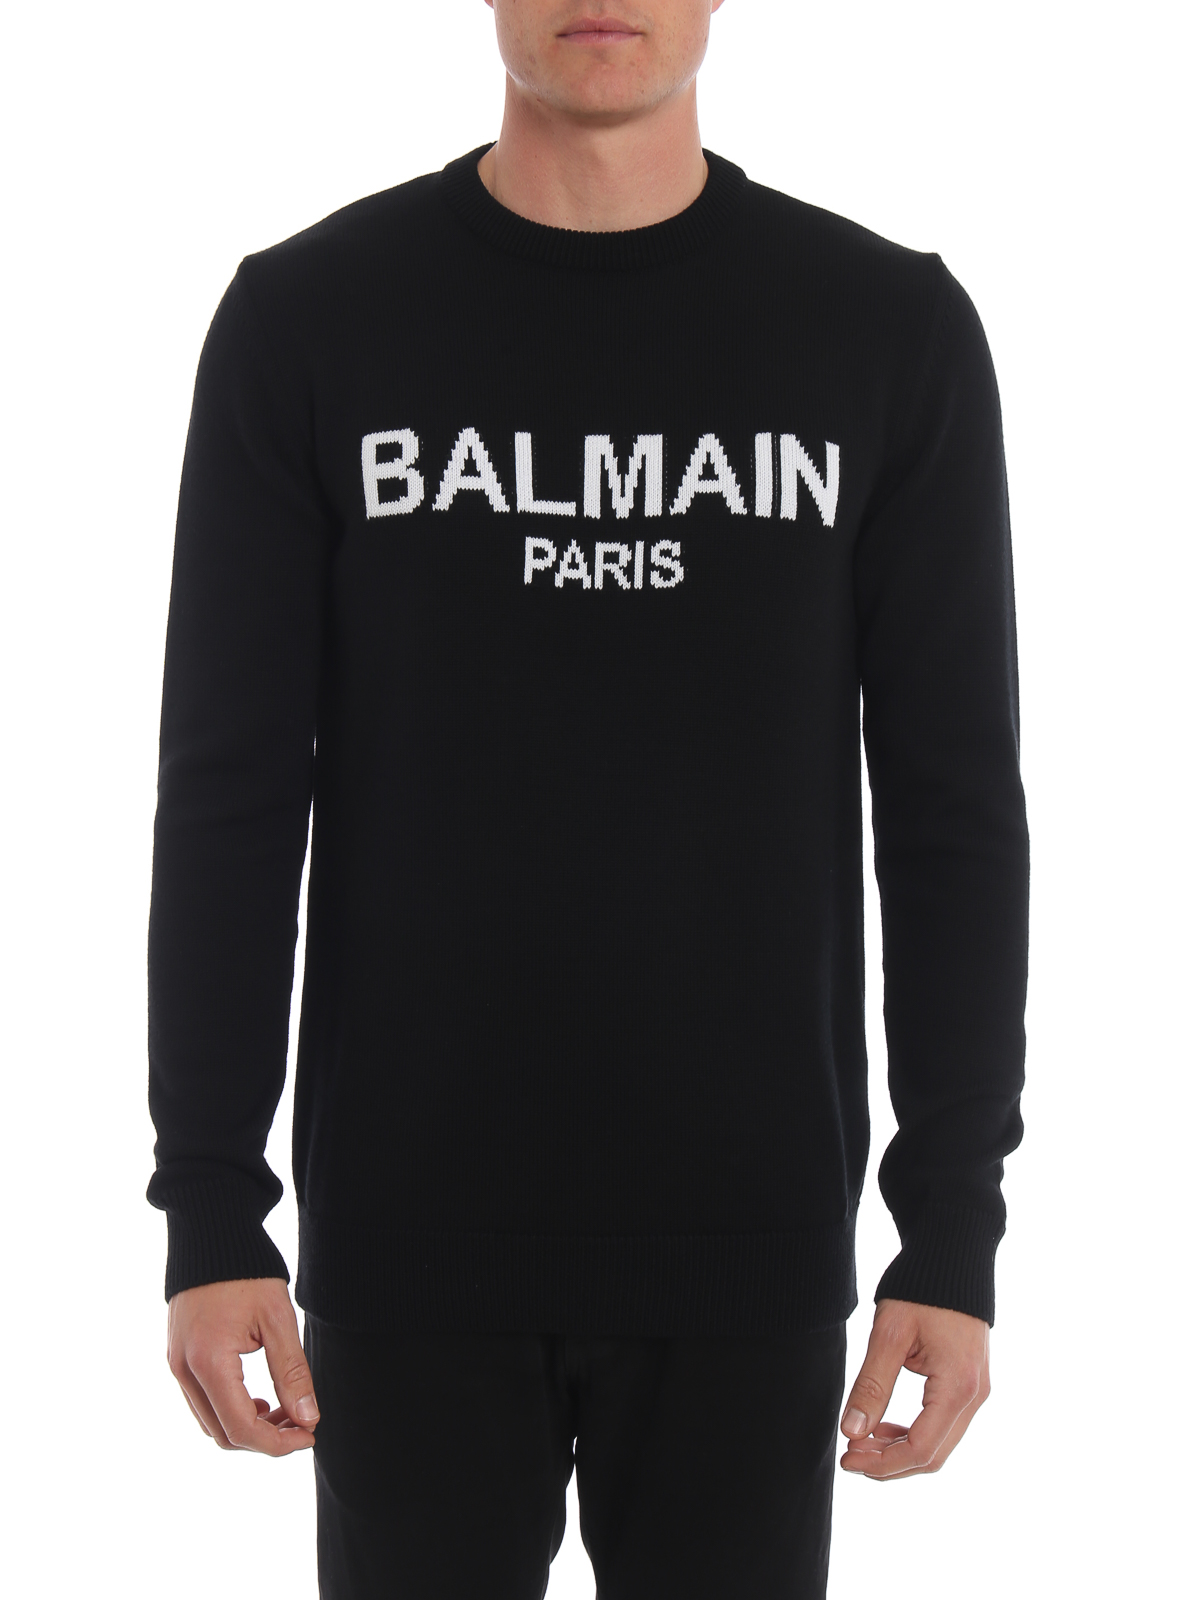 Crew necks Balmain - Balmain Paris sweater - RH13662K060EAB | iKRIX.com